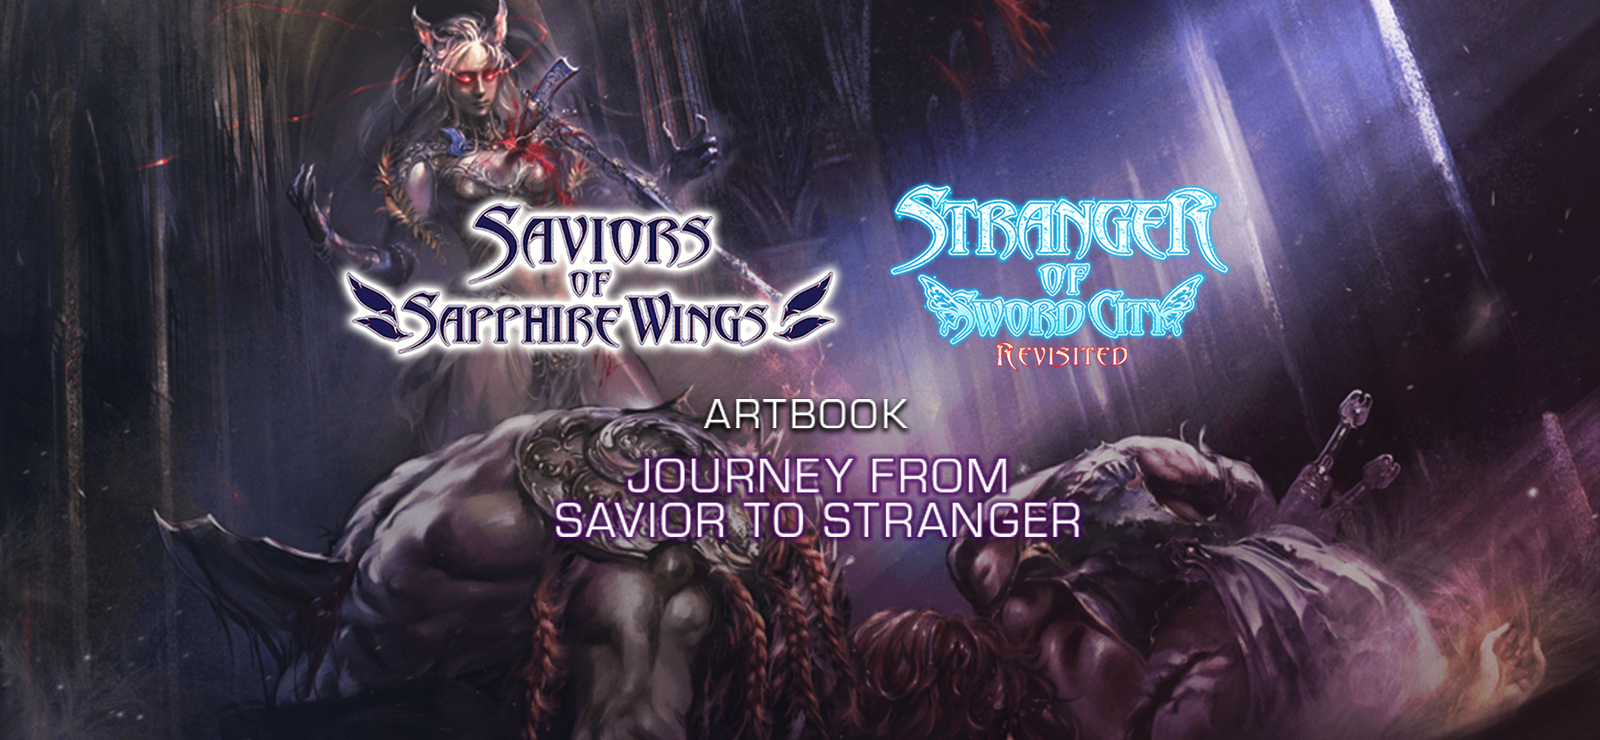 Saviors Of Sapphire Wings / Stranger Of Sword City Revisited - 'Journey From Savior To Stranger' Art Book